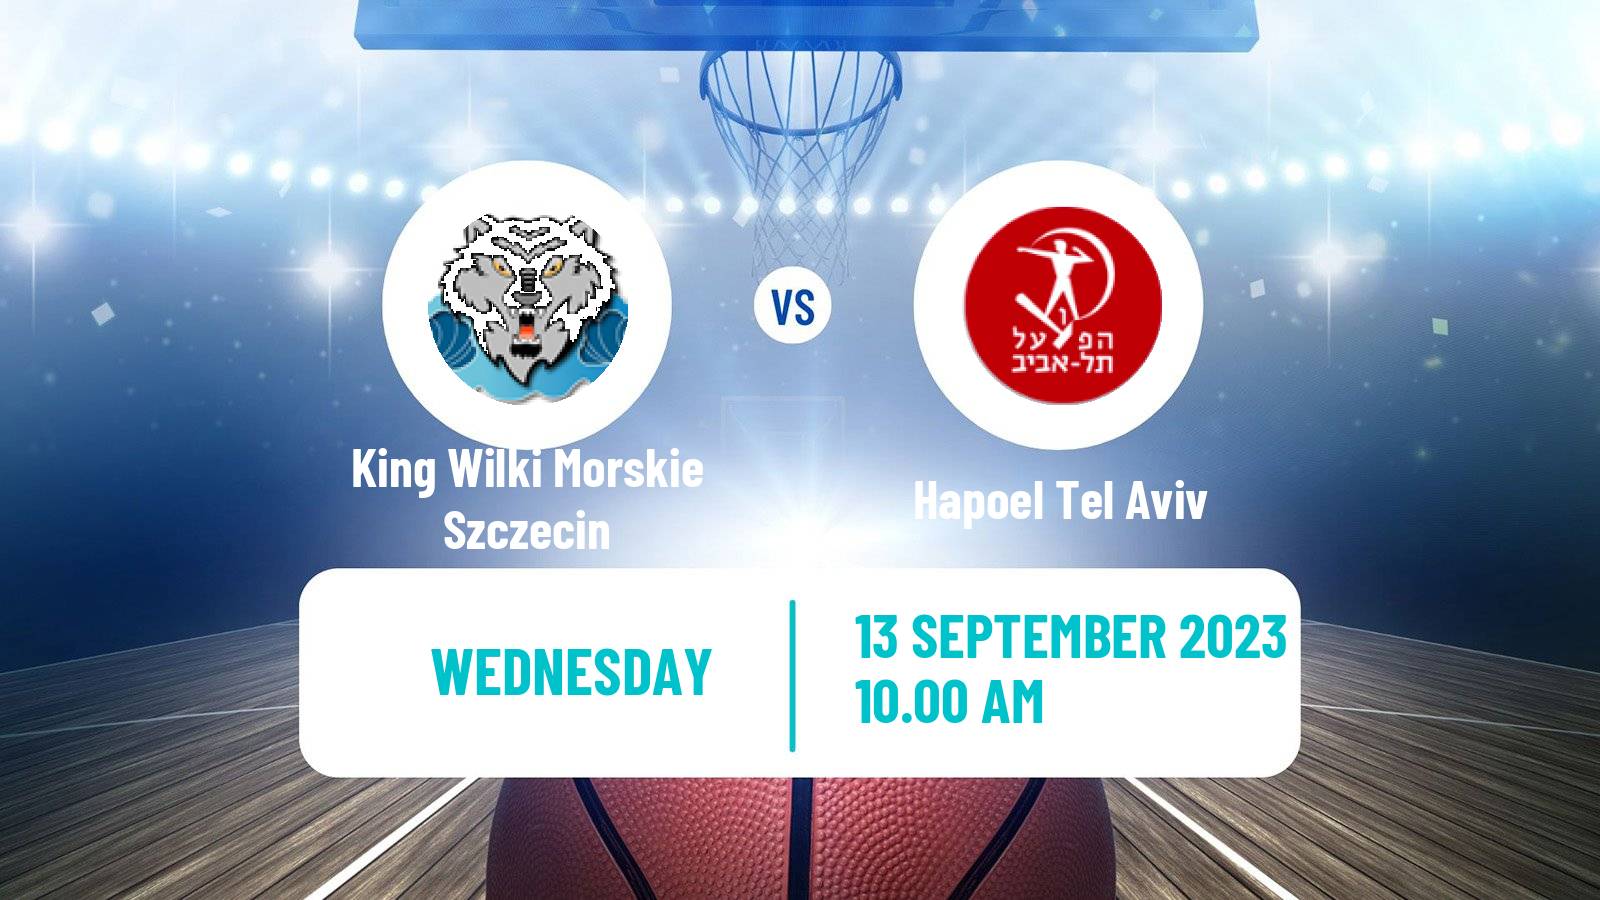 Basketball Club Friendly Basketball King Wilki Morskie Szczecin - Hapoel Tel Aviv